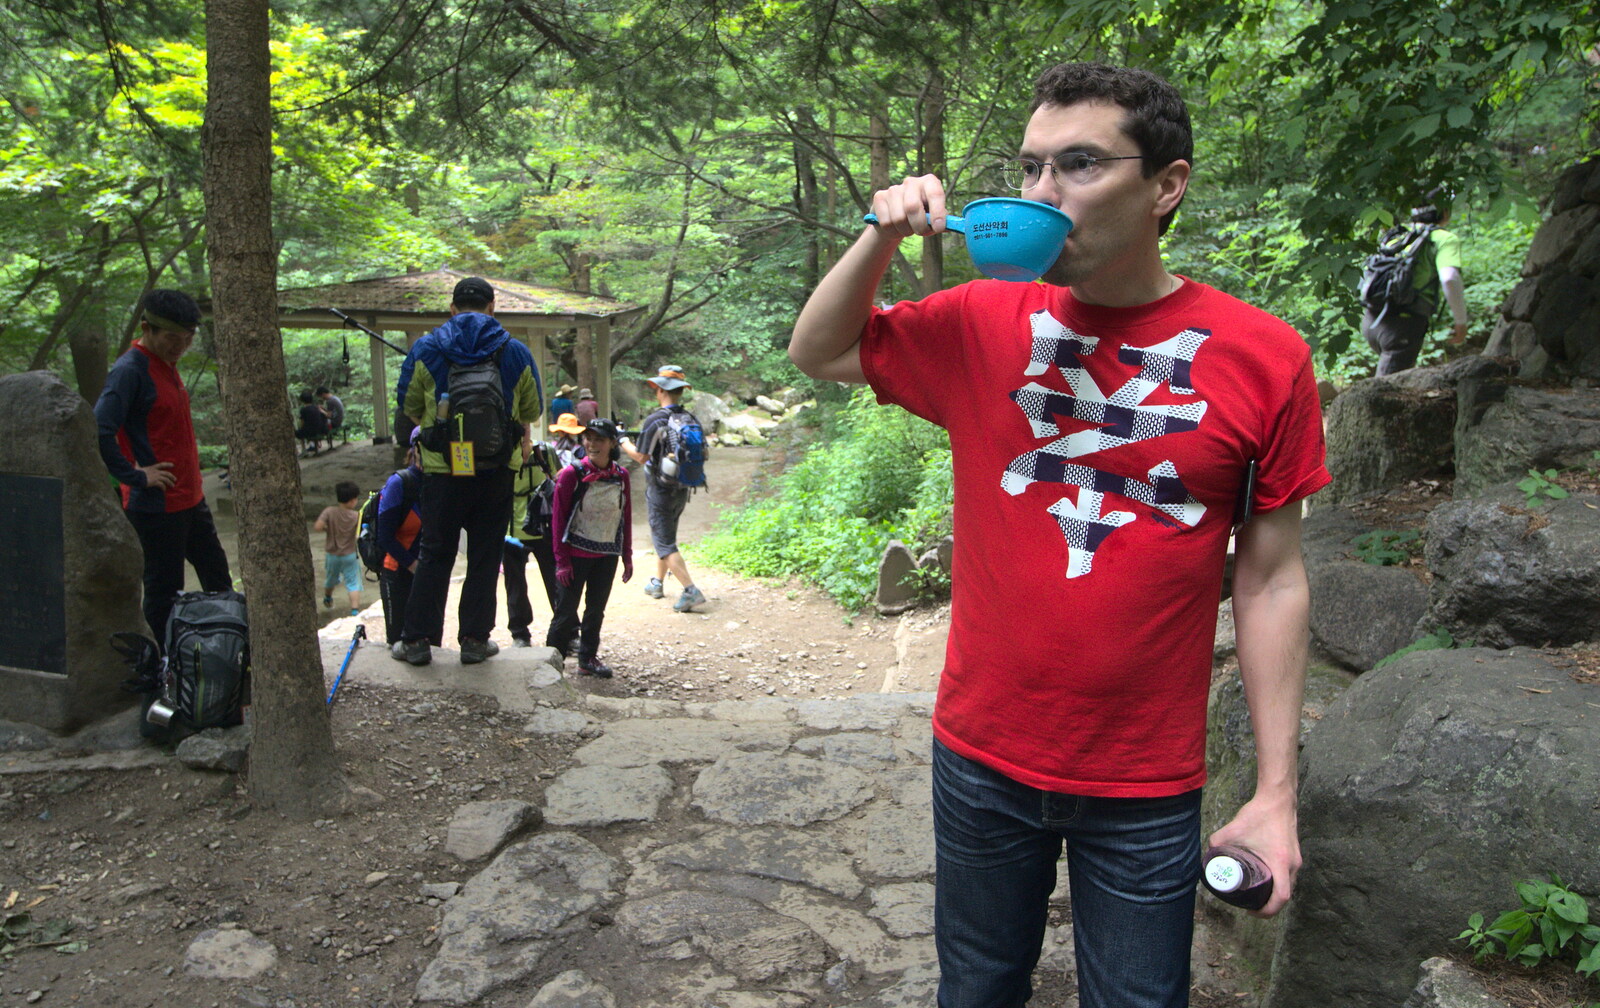 Chris has a drink from Working at Samsung, and Geumosan Mountain, Gumi, Gyeongsangbuk-do, Korea - 24th June 2012